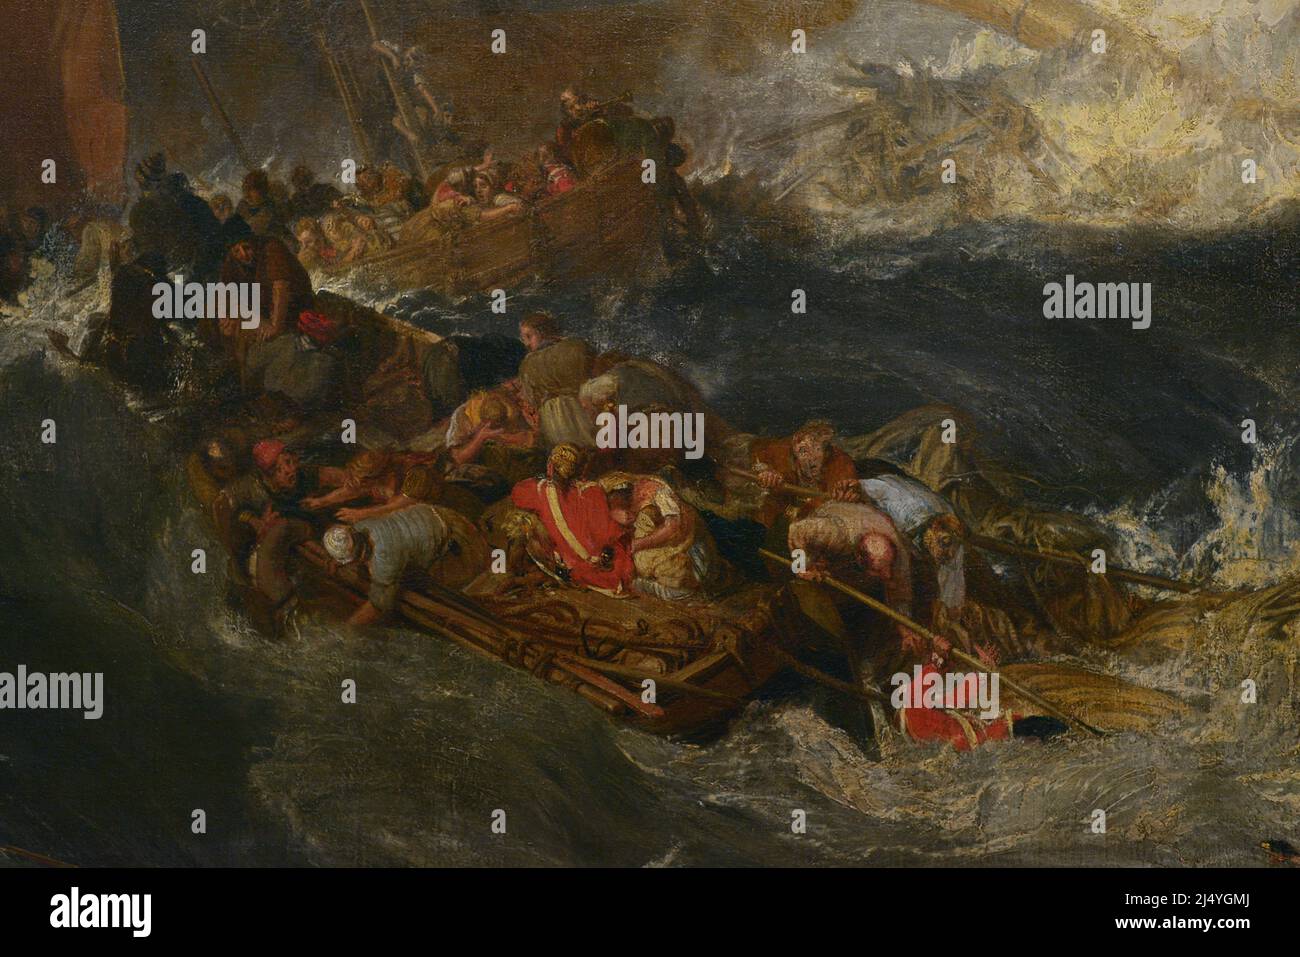 Joseph Mallord William Turner (1775-1851). English painter. The Wreck of a Transport Ship, ca. 1810. Oil on canvas (173 x 245 cm). Detail. Calouste Gulbenkian Museum. Lisbon. Portugal. Stock Photo